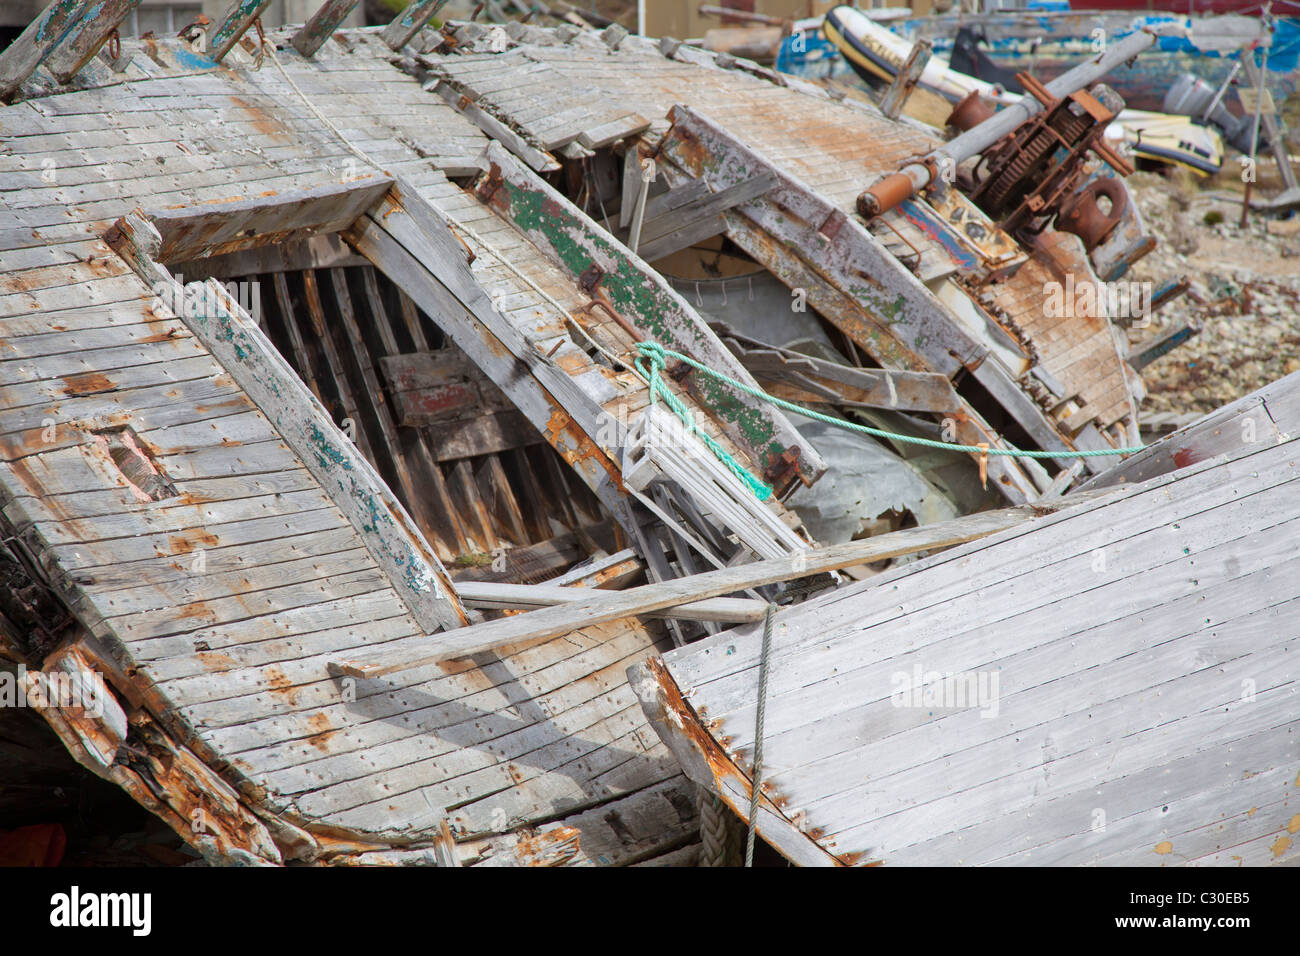 Wooden shipwrecks, Port Stanley, East Falklands Stock Photo